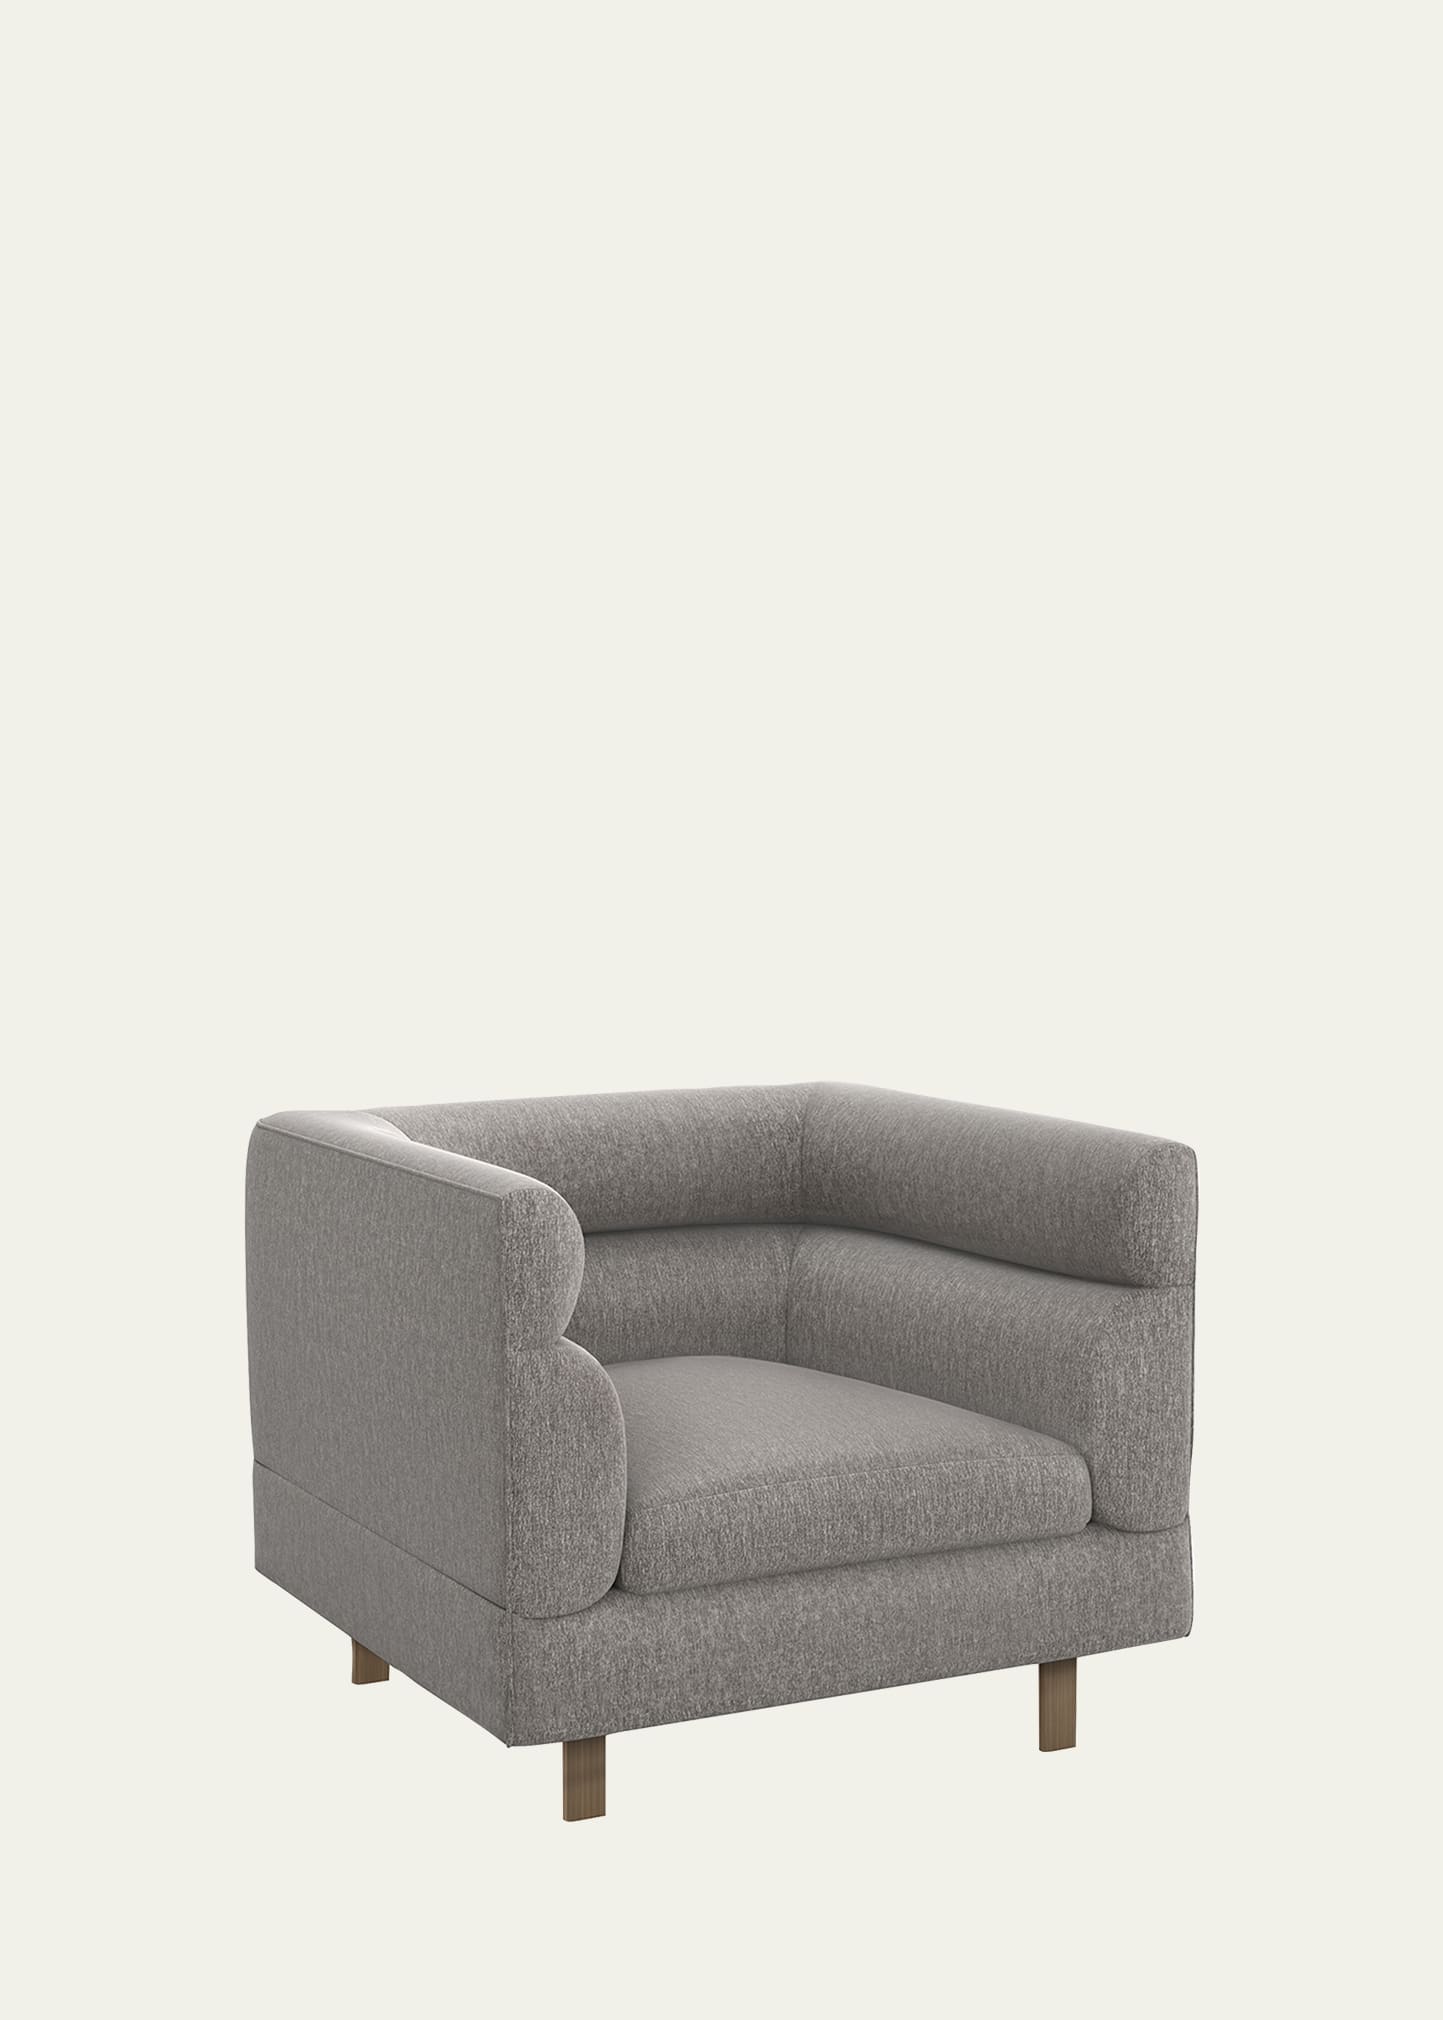 Interlude Home Ornette Chair In Gray